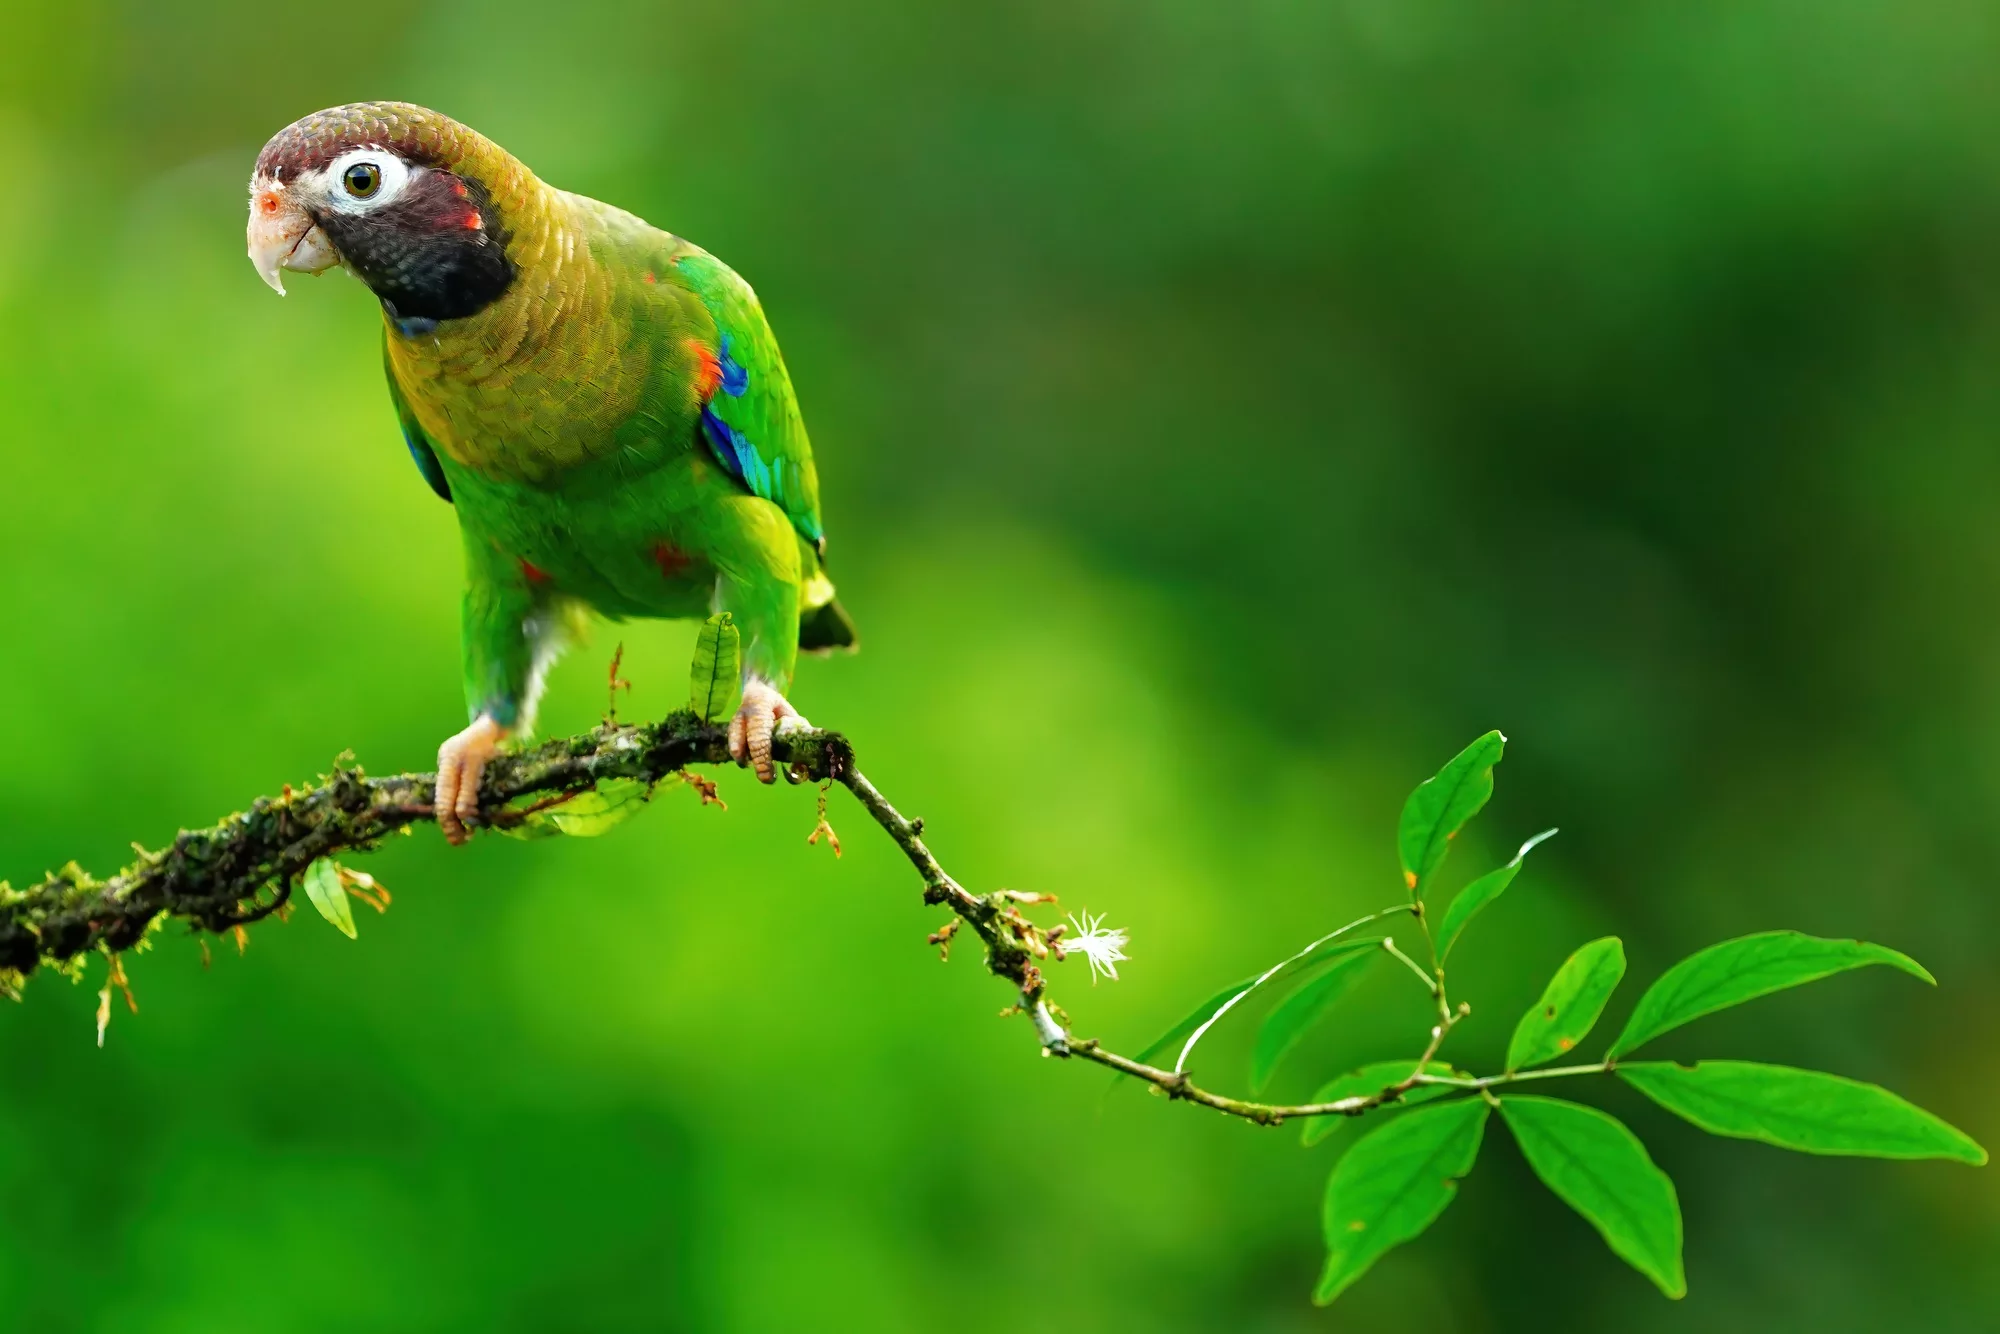 Costa Rica photo tour with Don Mammoser - bird diversity